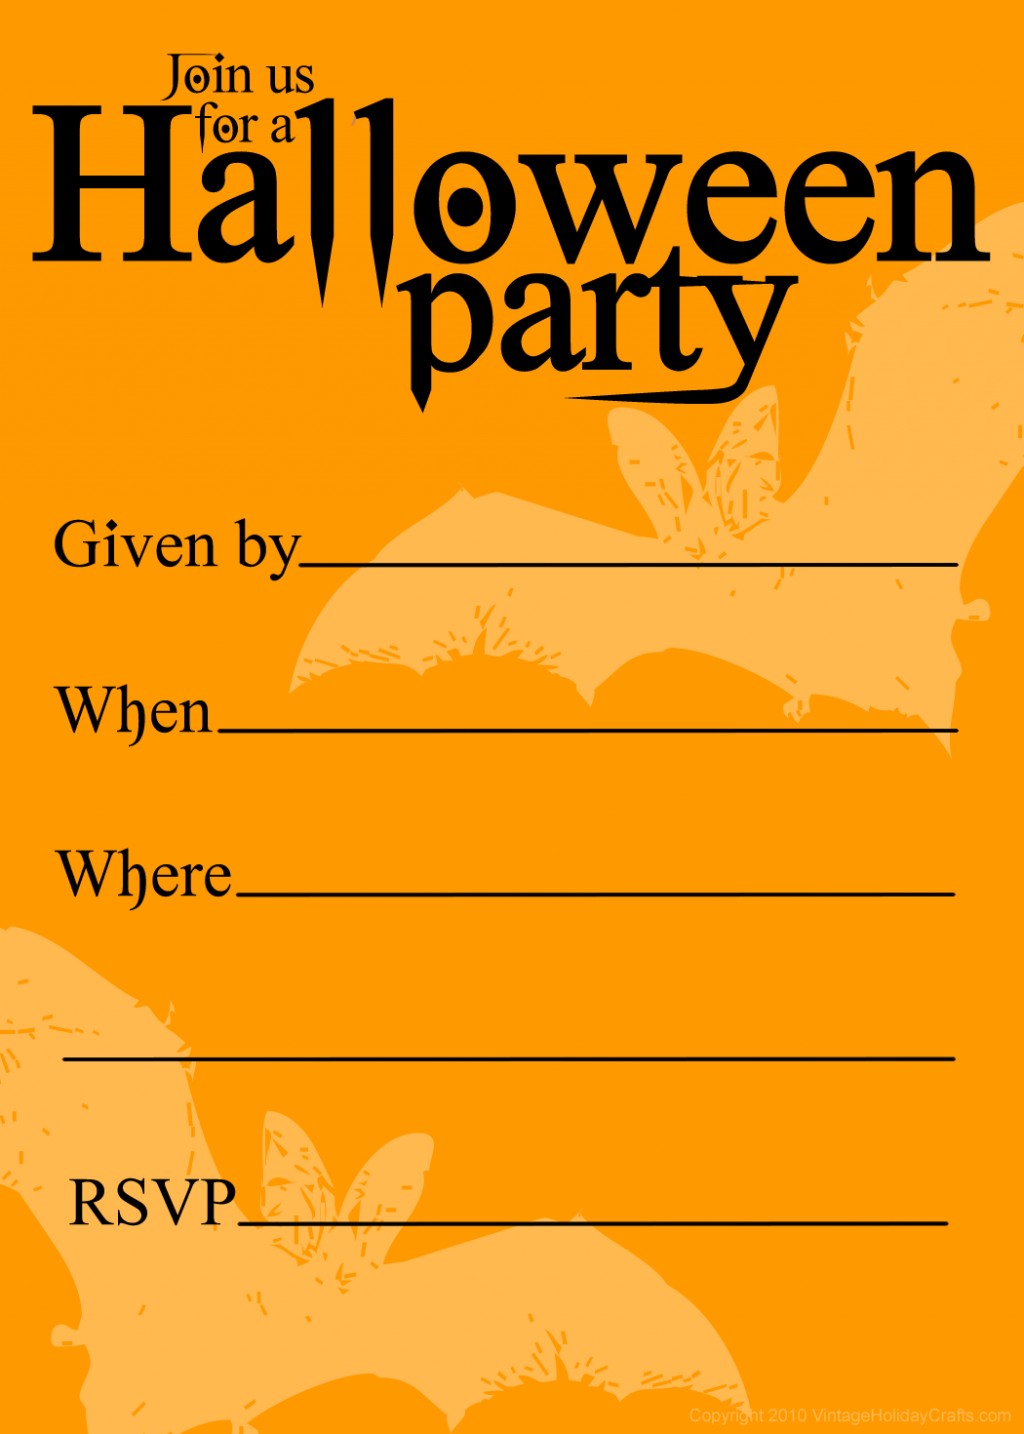 free-halloween-invitation-cliparts-download-free-halloween-invitation